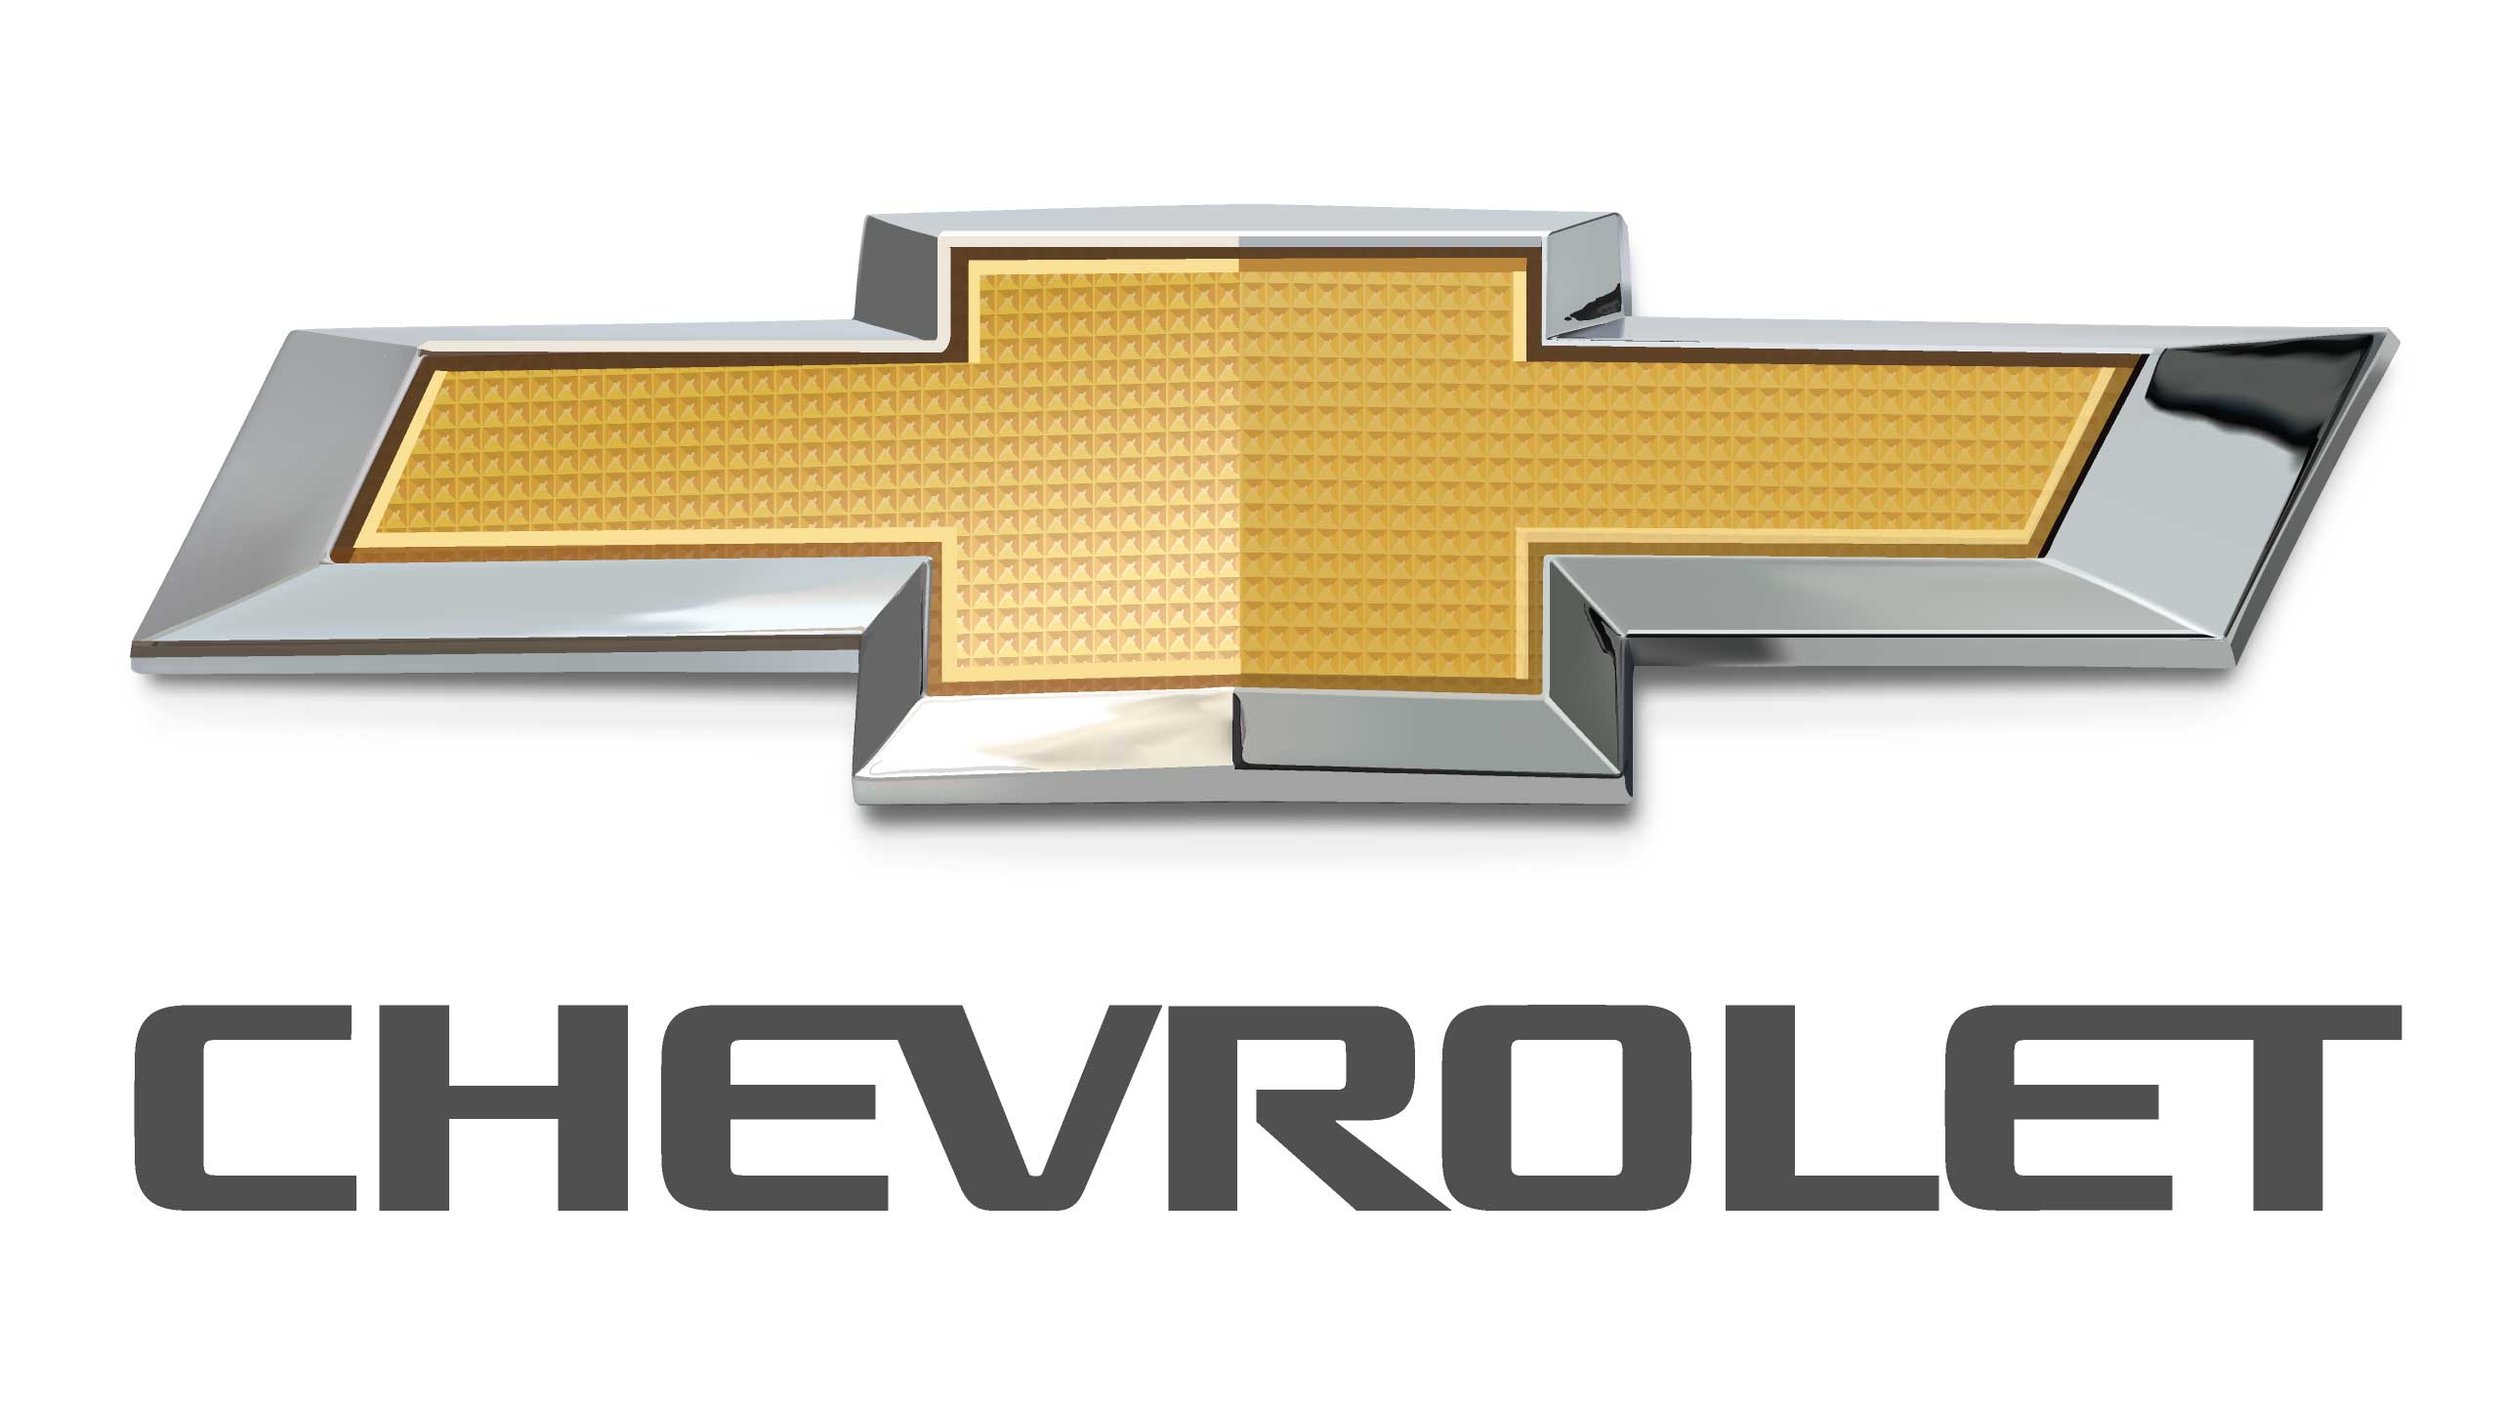 Chevrolet-logo-2013-2560x1440.jpg